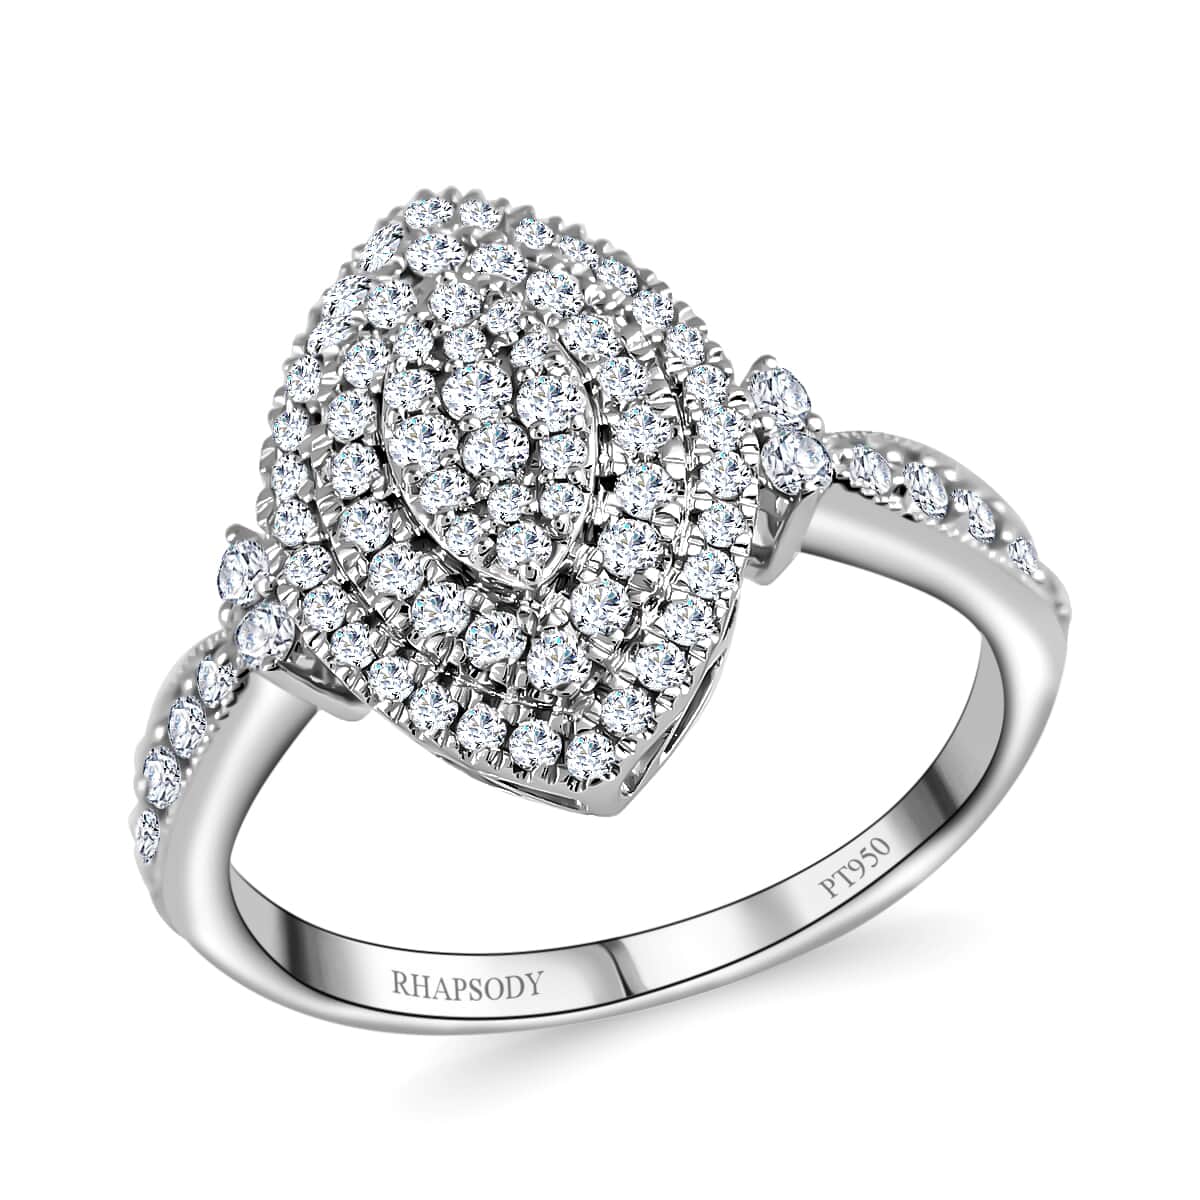 Rhapsody 950 Platinum IGI CERTIFIED Diamond E-F VS Marquise Shape Ring (Size 6.0) 7.80 Grams 1.00 ctw image number 0